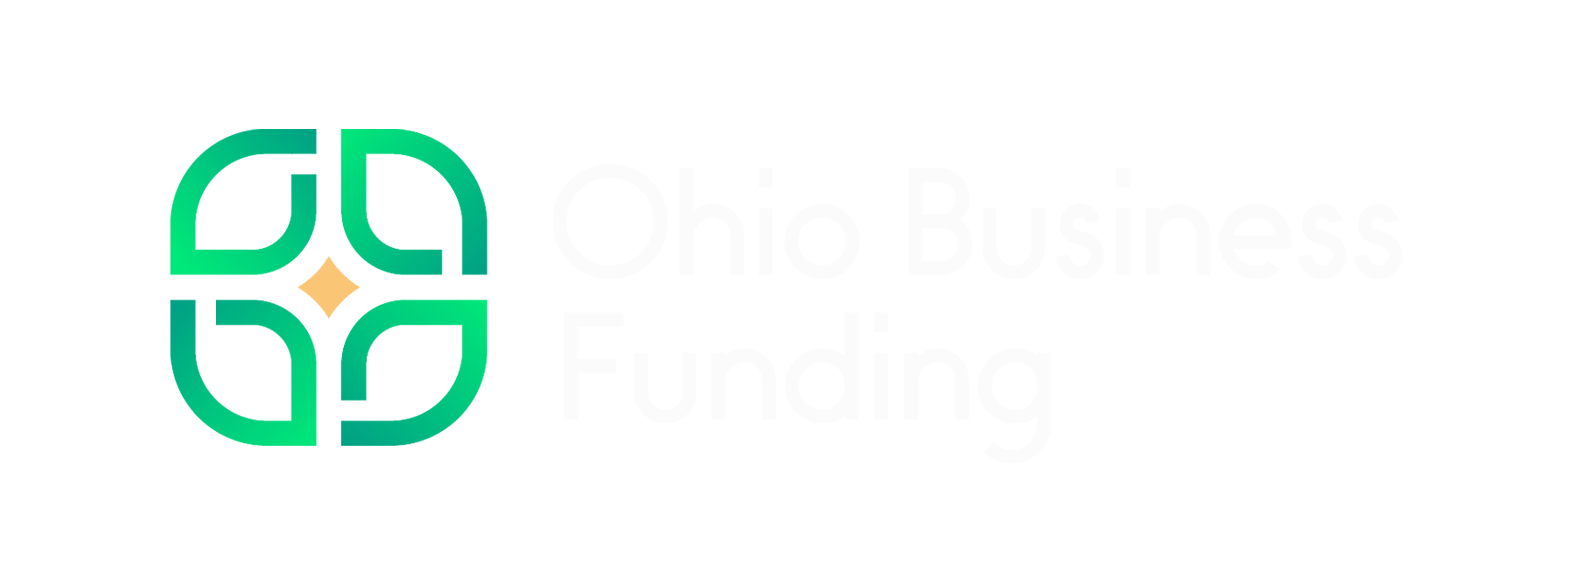 Ohio Business Funding header/footer logo 